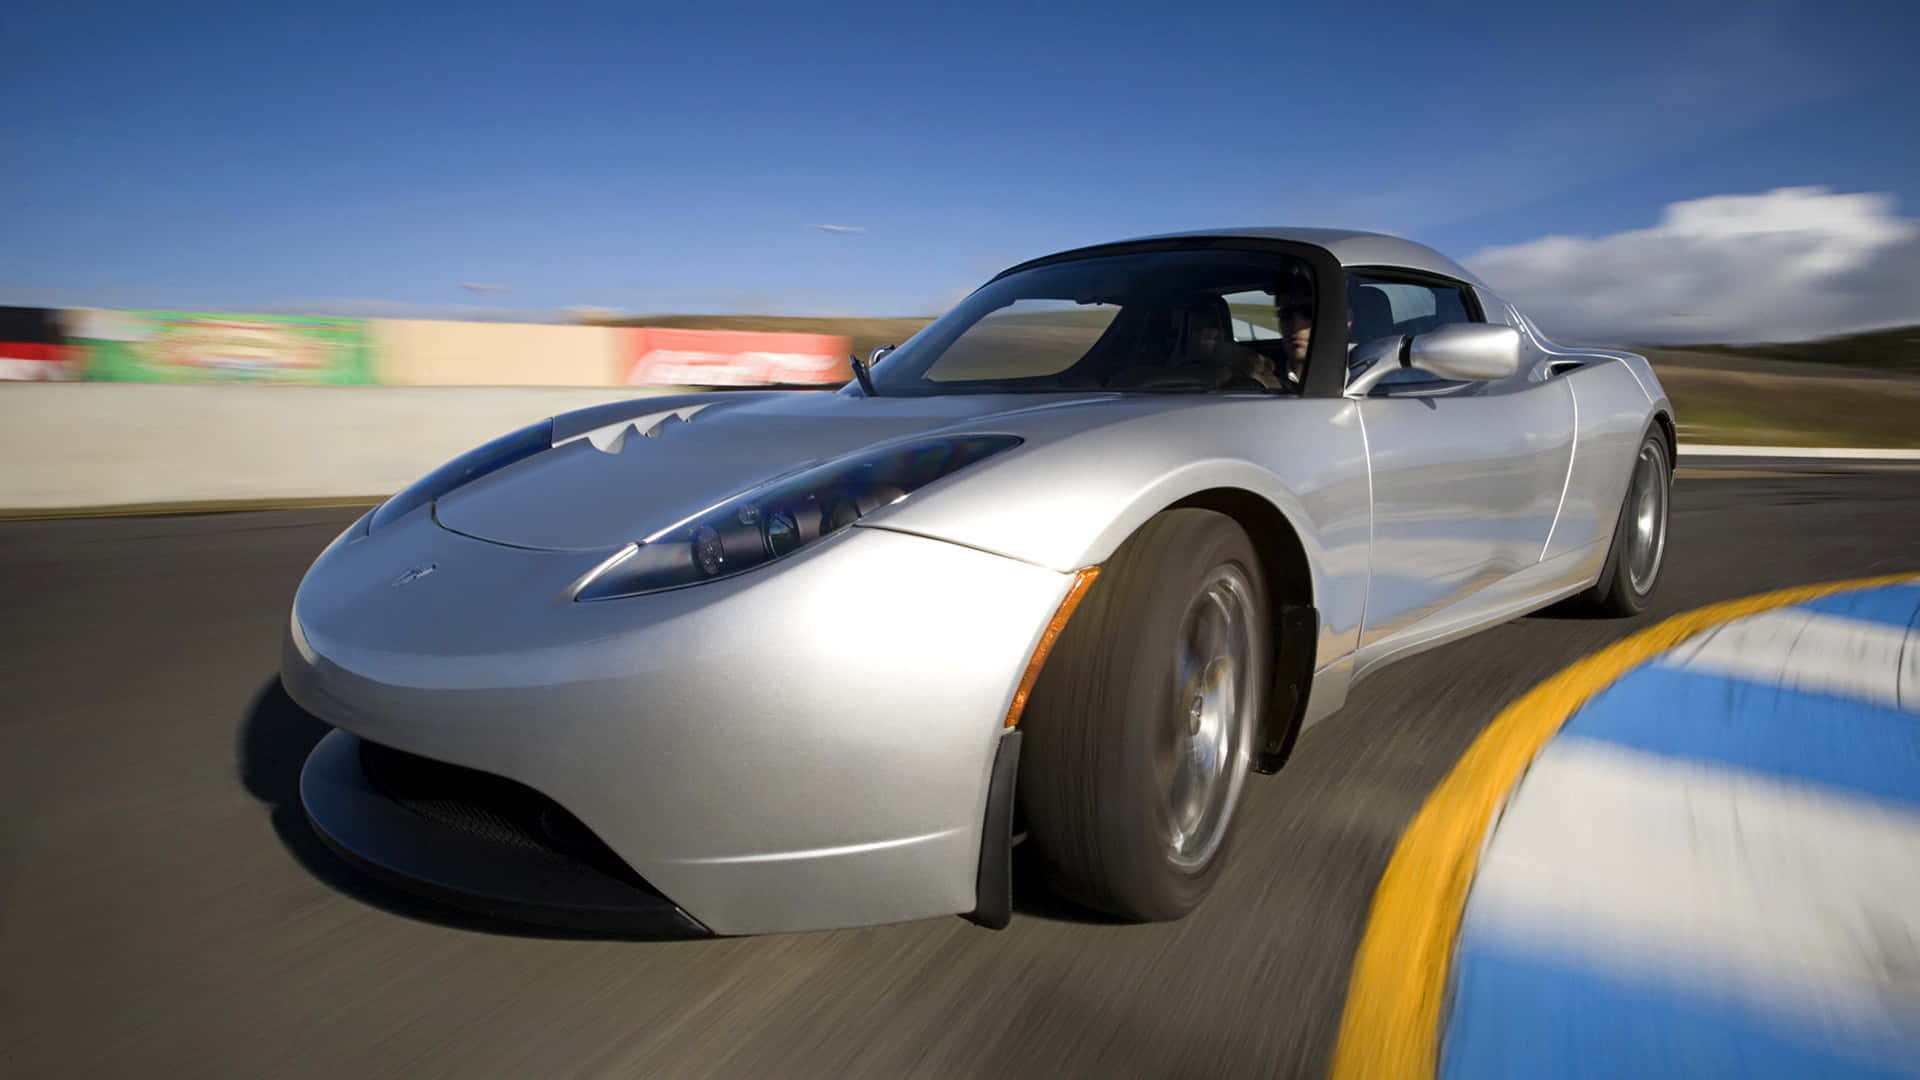 The Futuristic Tesla Roadster On A Riding Spree